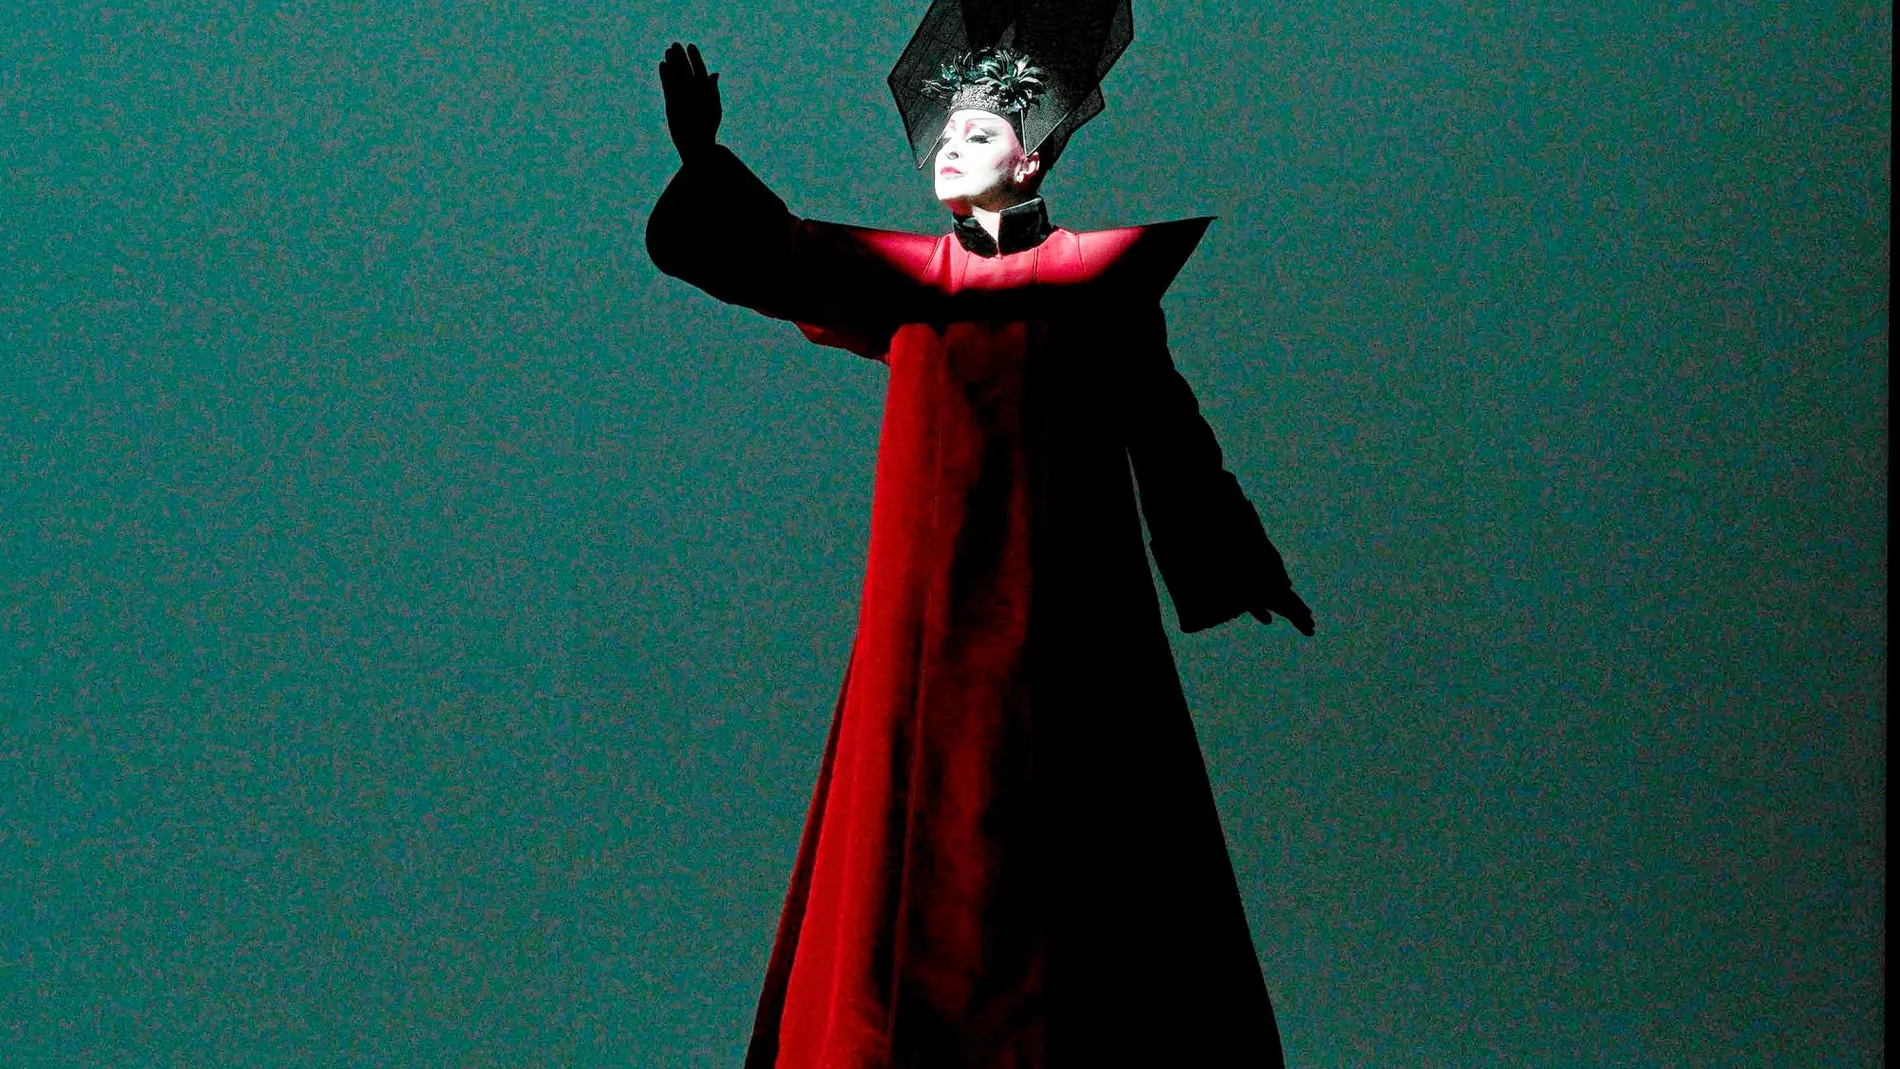 Irene Theorin como la princesa Turandot de la ópera de Puccini / Foto: Javier del Real